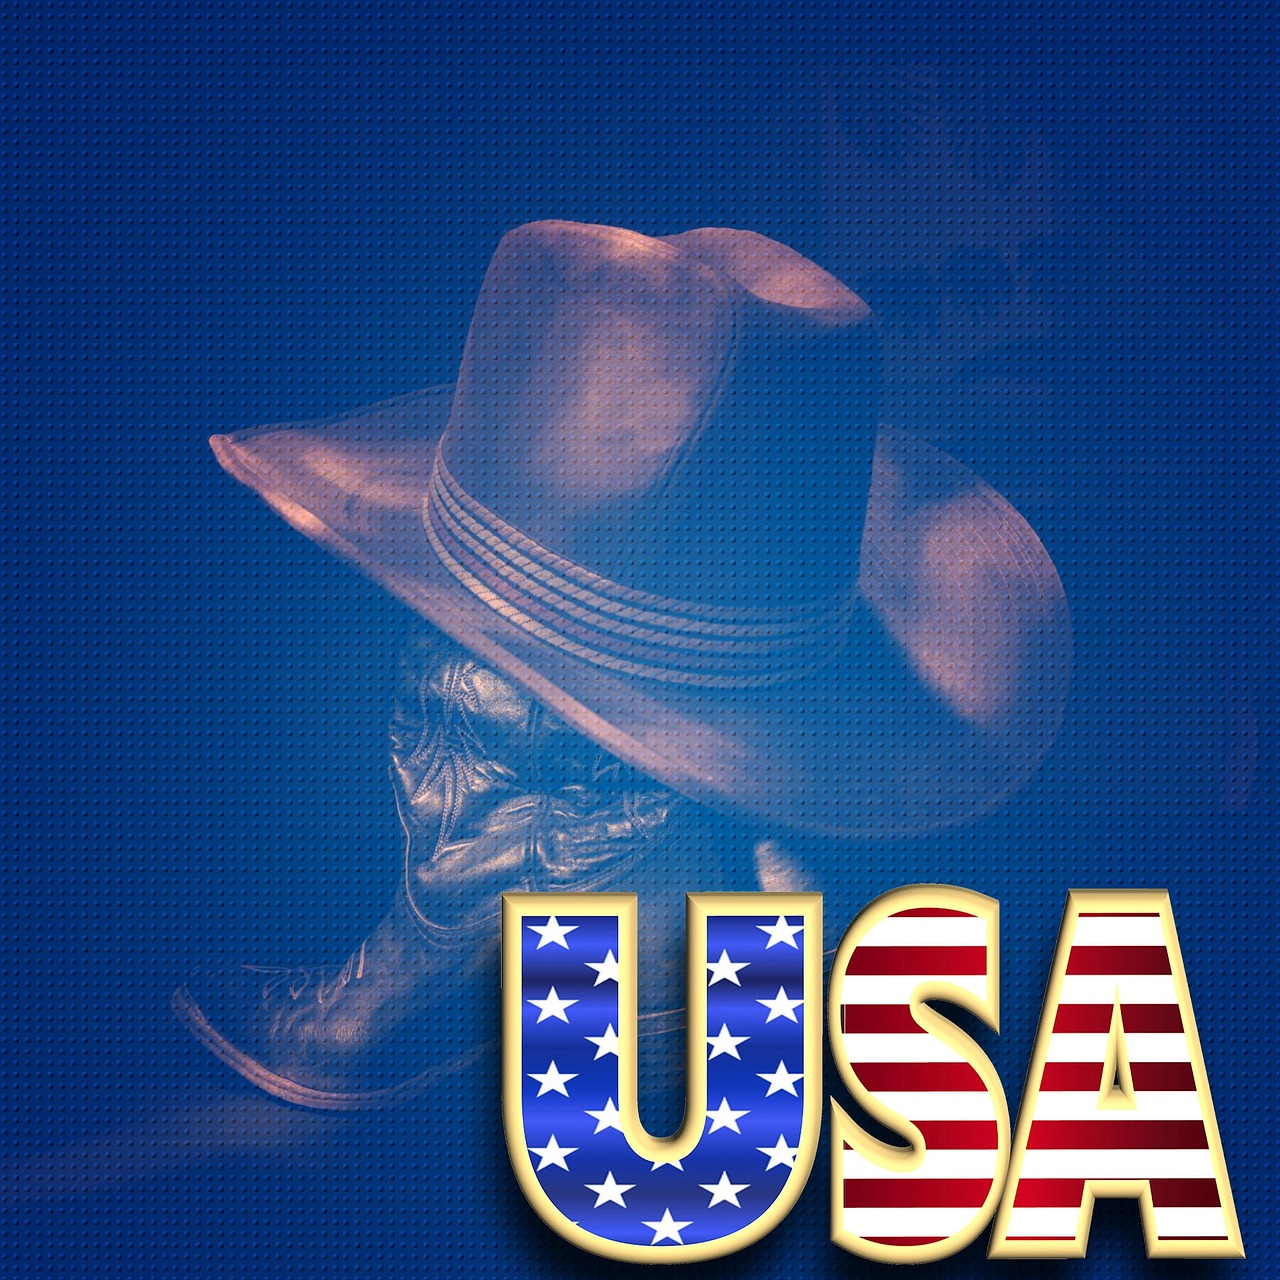 Cowboy,hat,boots,usa,america - free image from needpix.com